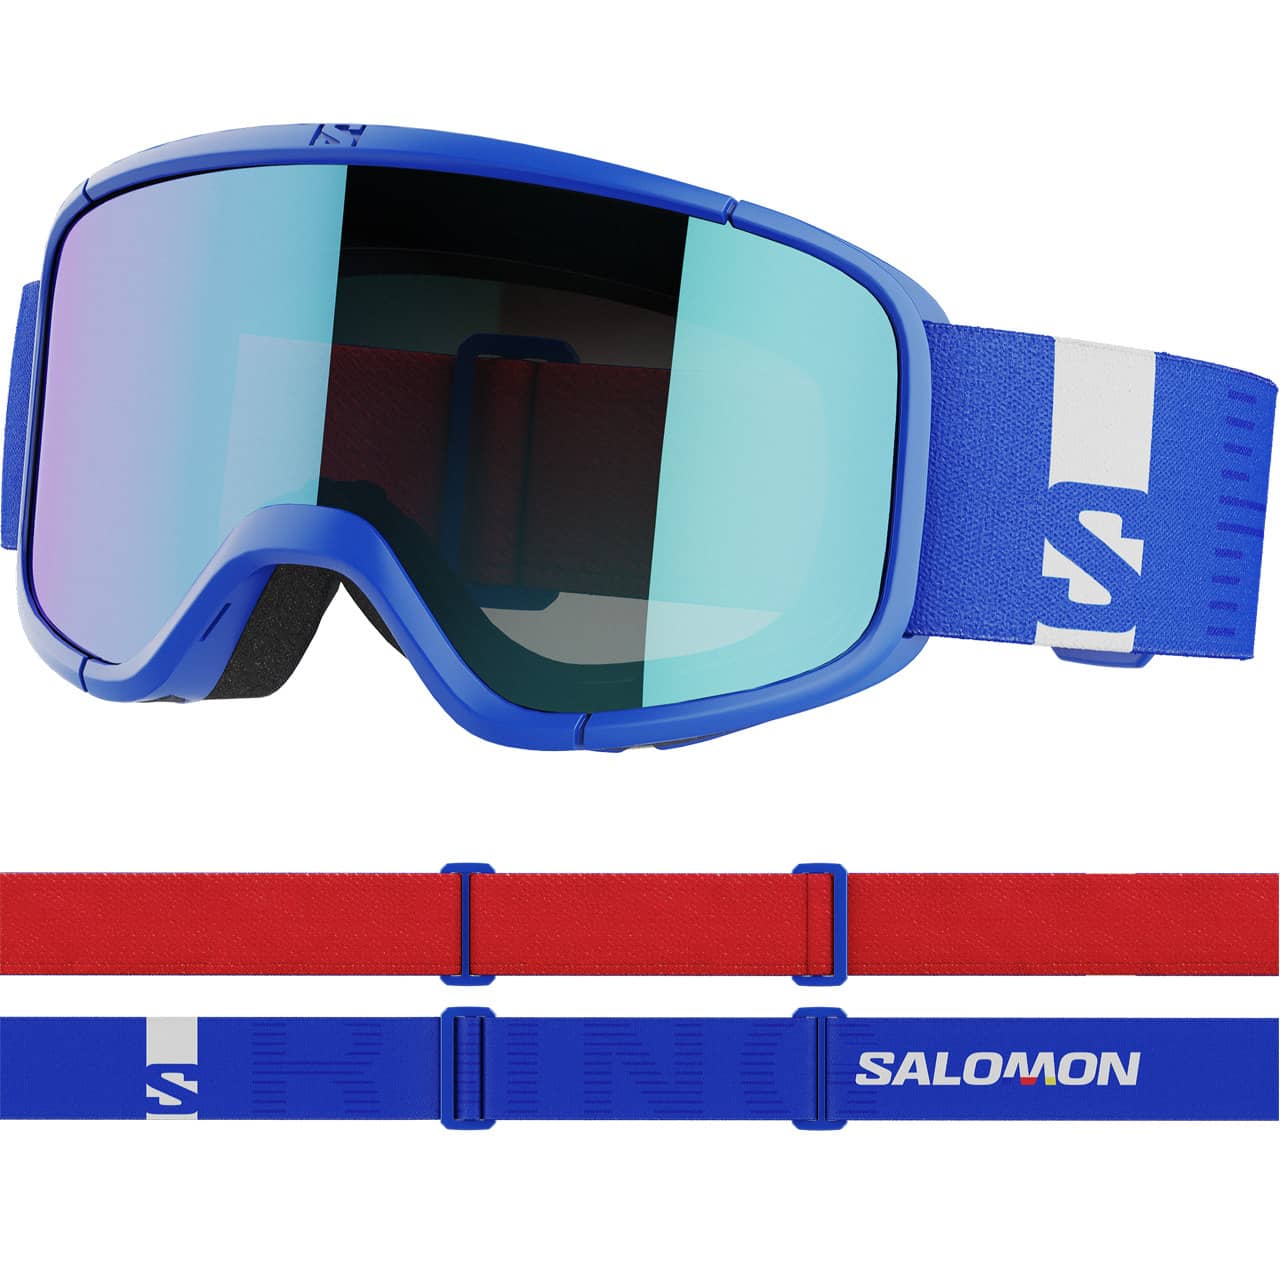 Salomon Aksium 2.0 S race blue ML mid blue |Salomon Ski | Salomon | S | BRANDS | XSPO.com